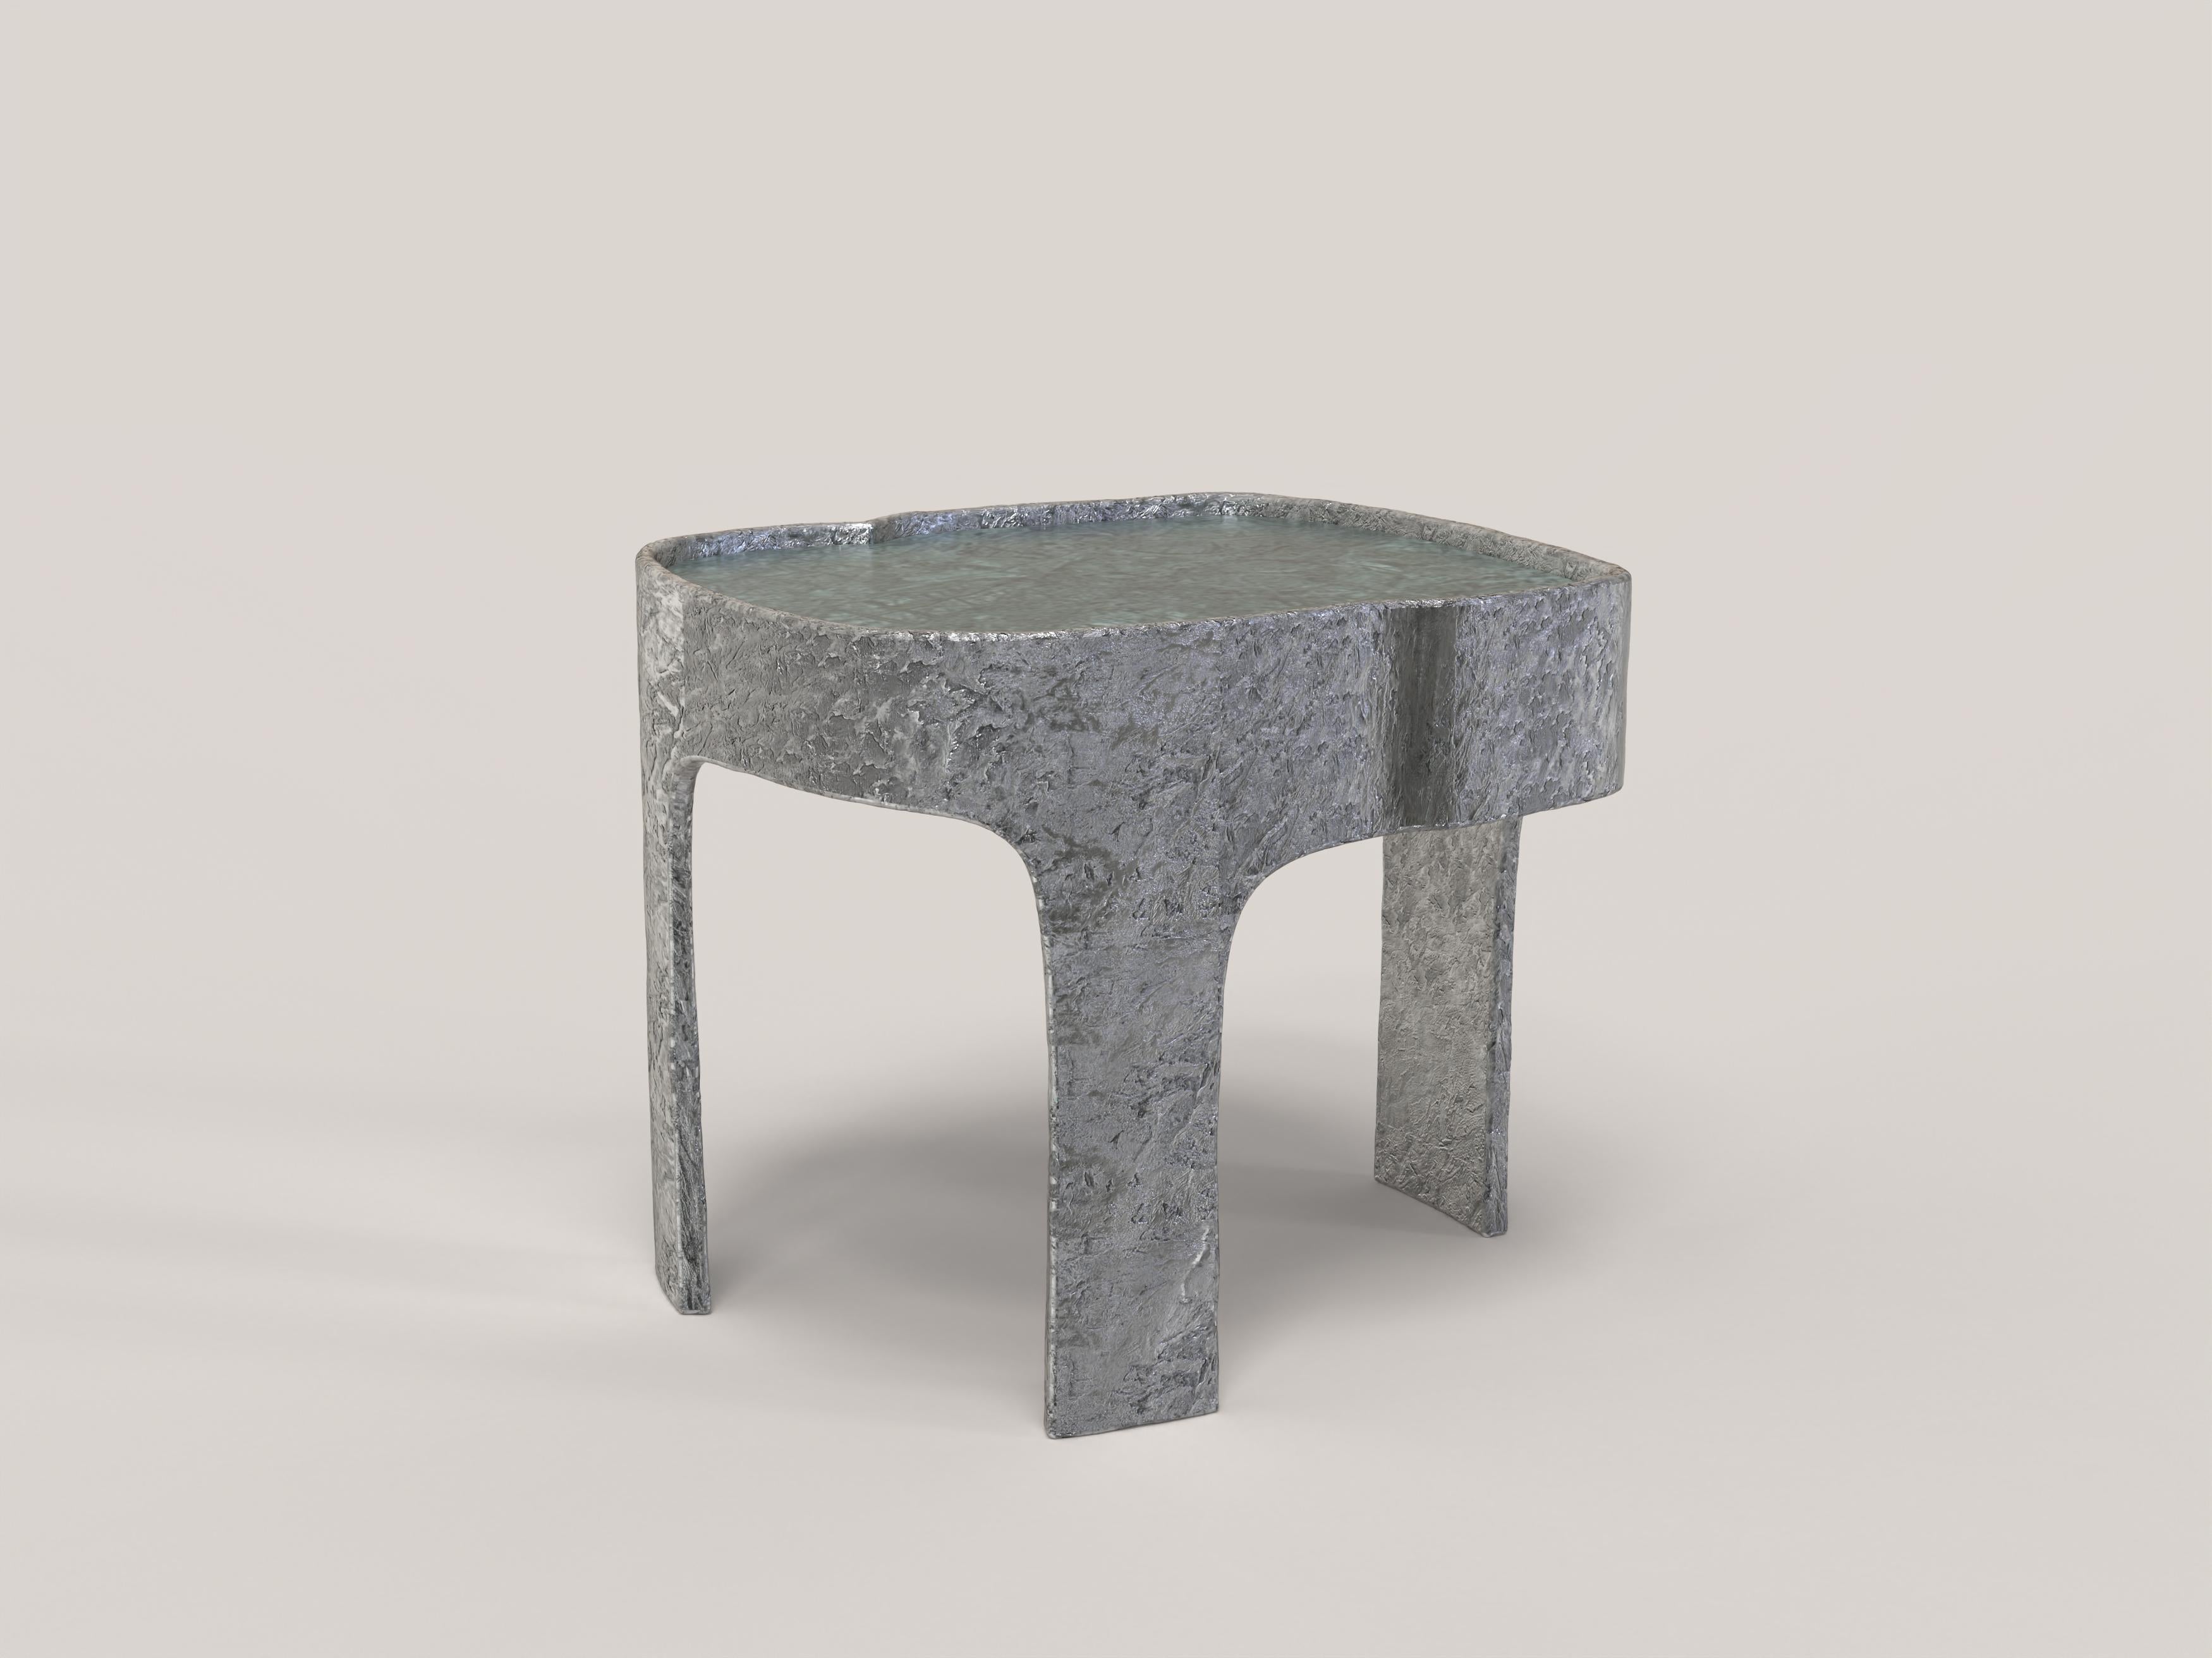 Cast Limited Edition Marble Aluminium Table, Sumatra V1 by Edizione Limitata For Sale